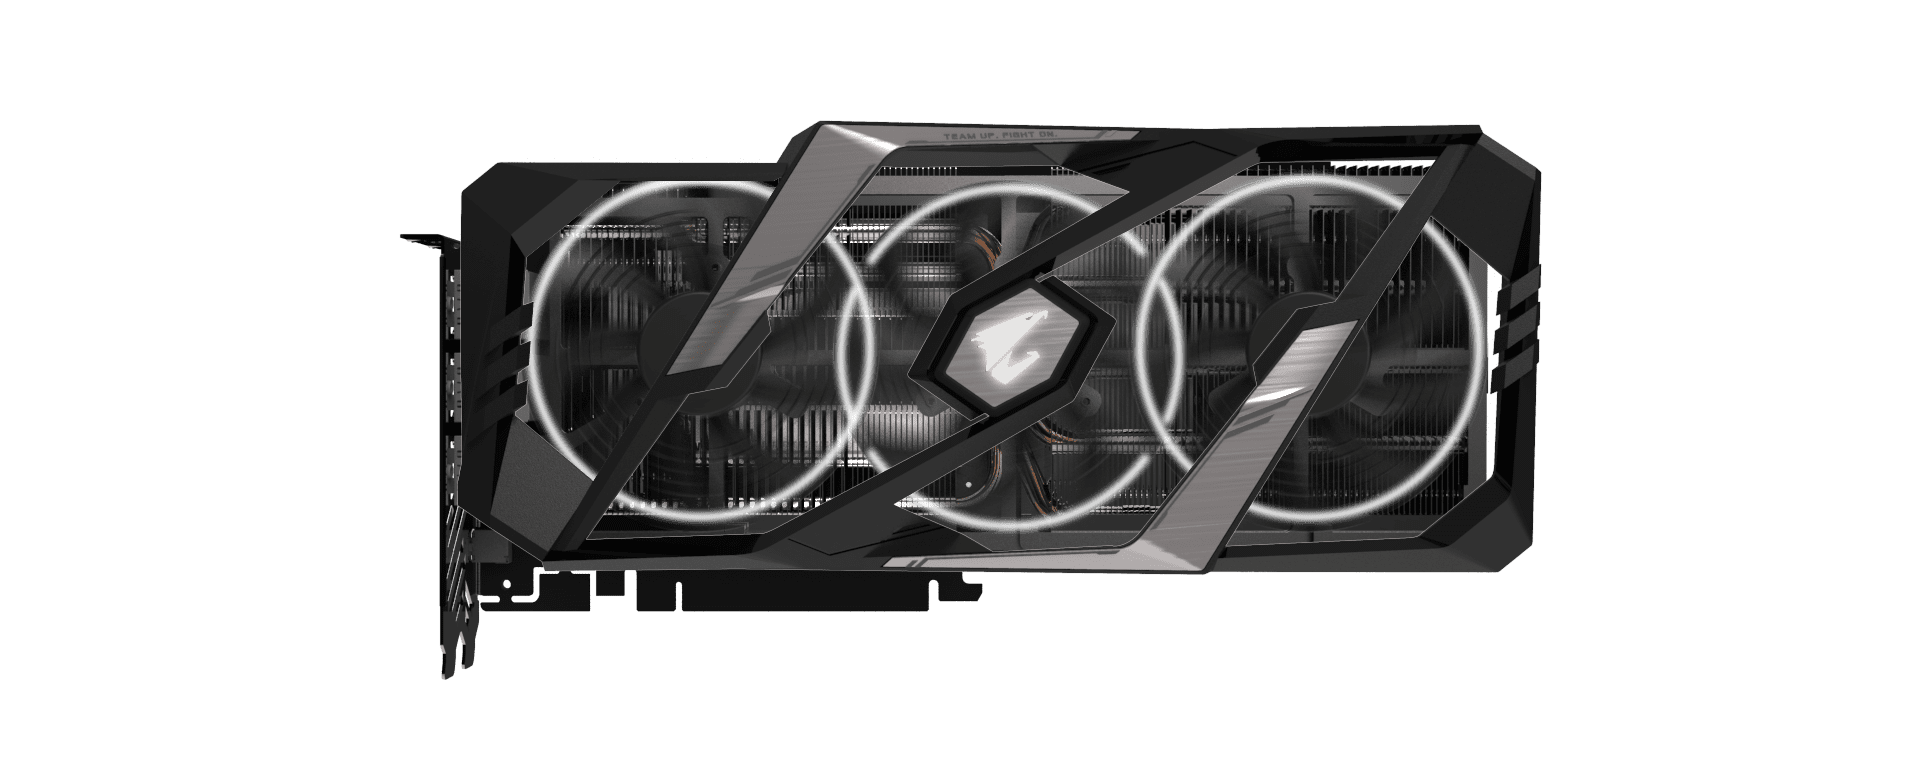 AORUS GeForce® RTX 2060 SUPER™ 8G (rev. 1.0) Key Features